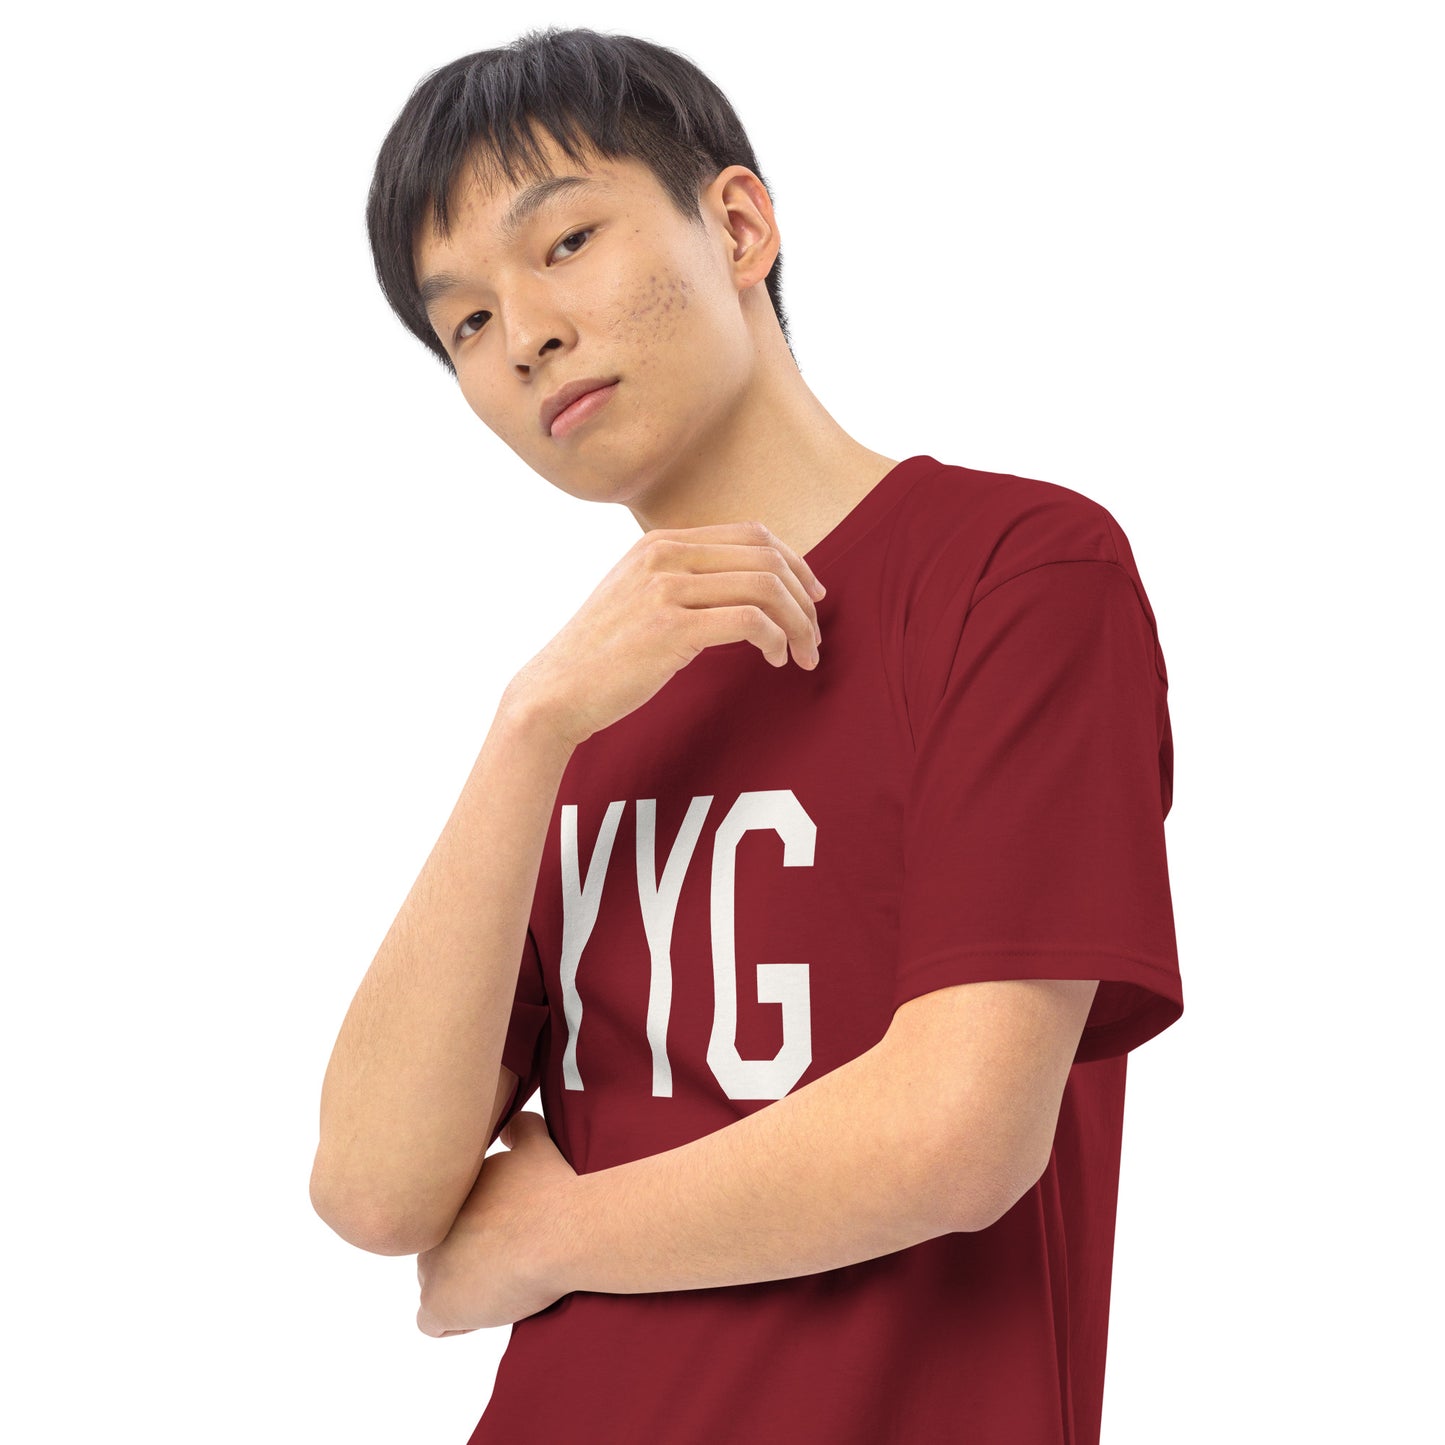 YYG Charlottetown Prince Edward Island Men's Premium Heavyweight T-Shirt